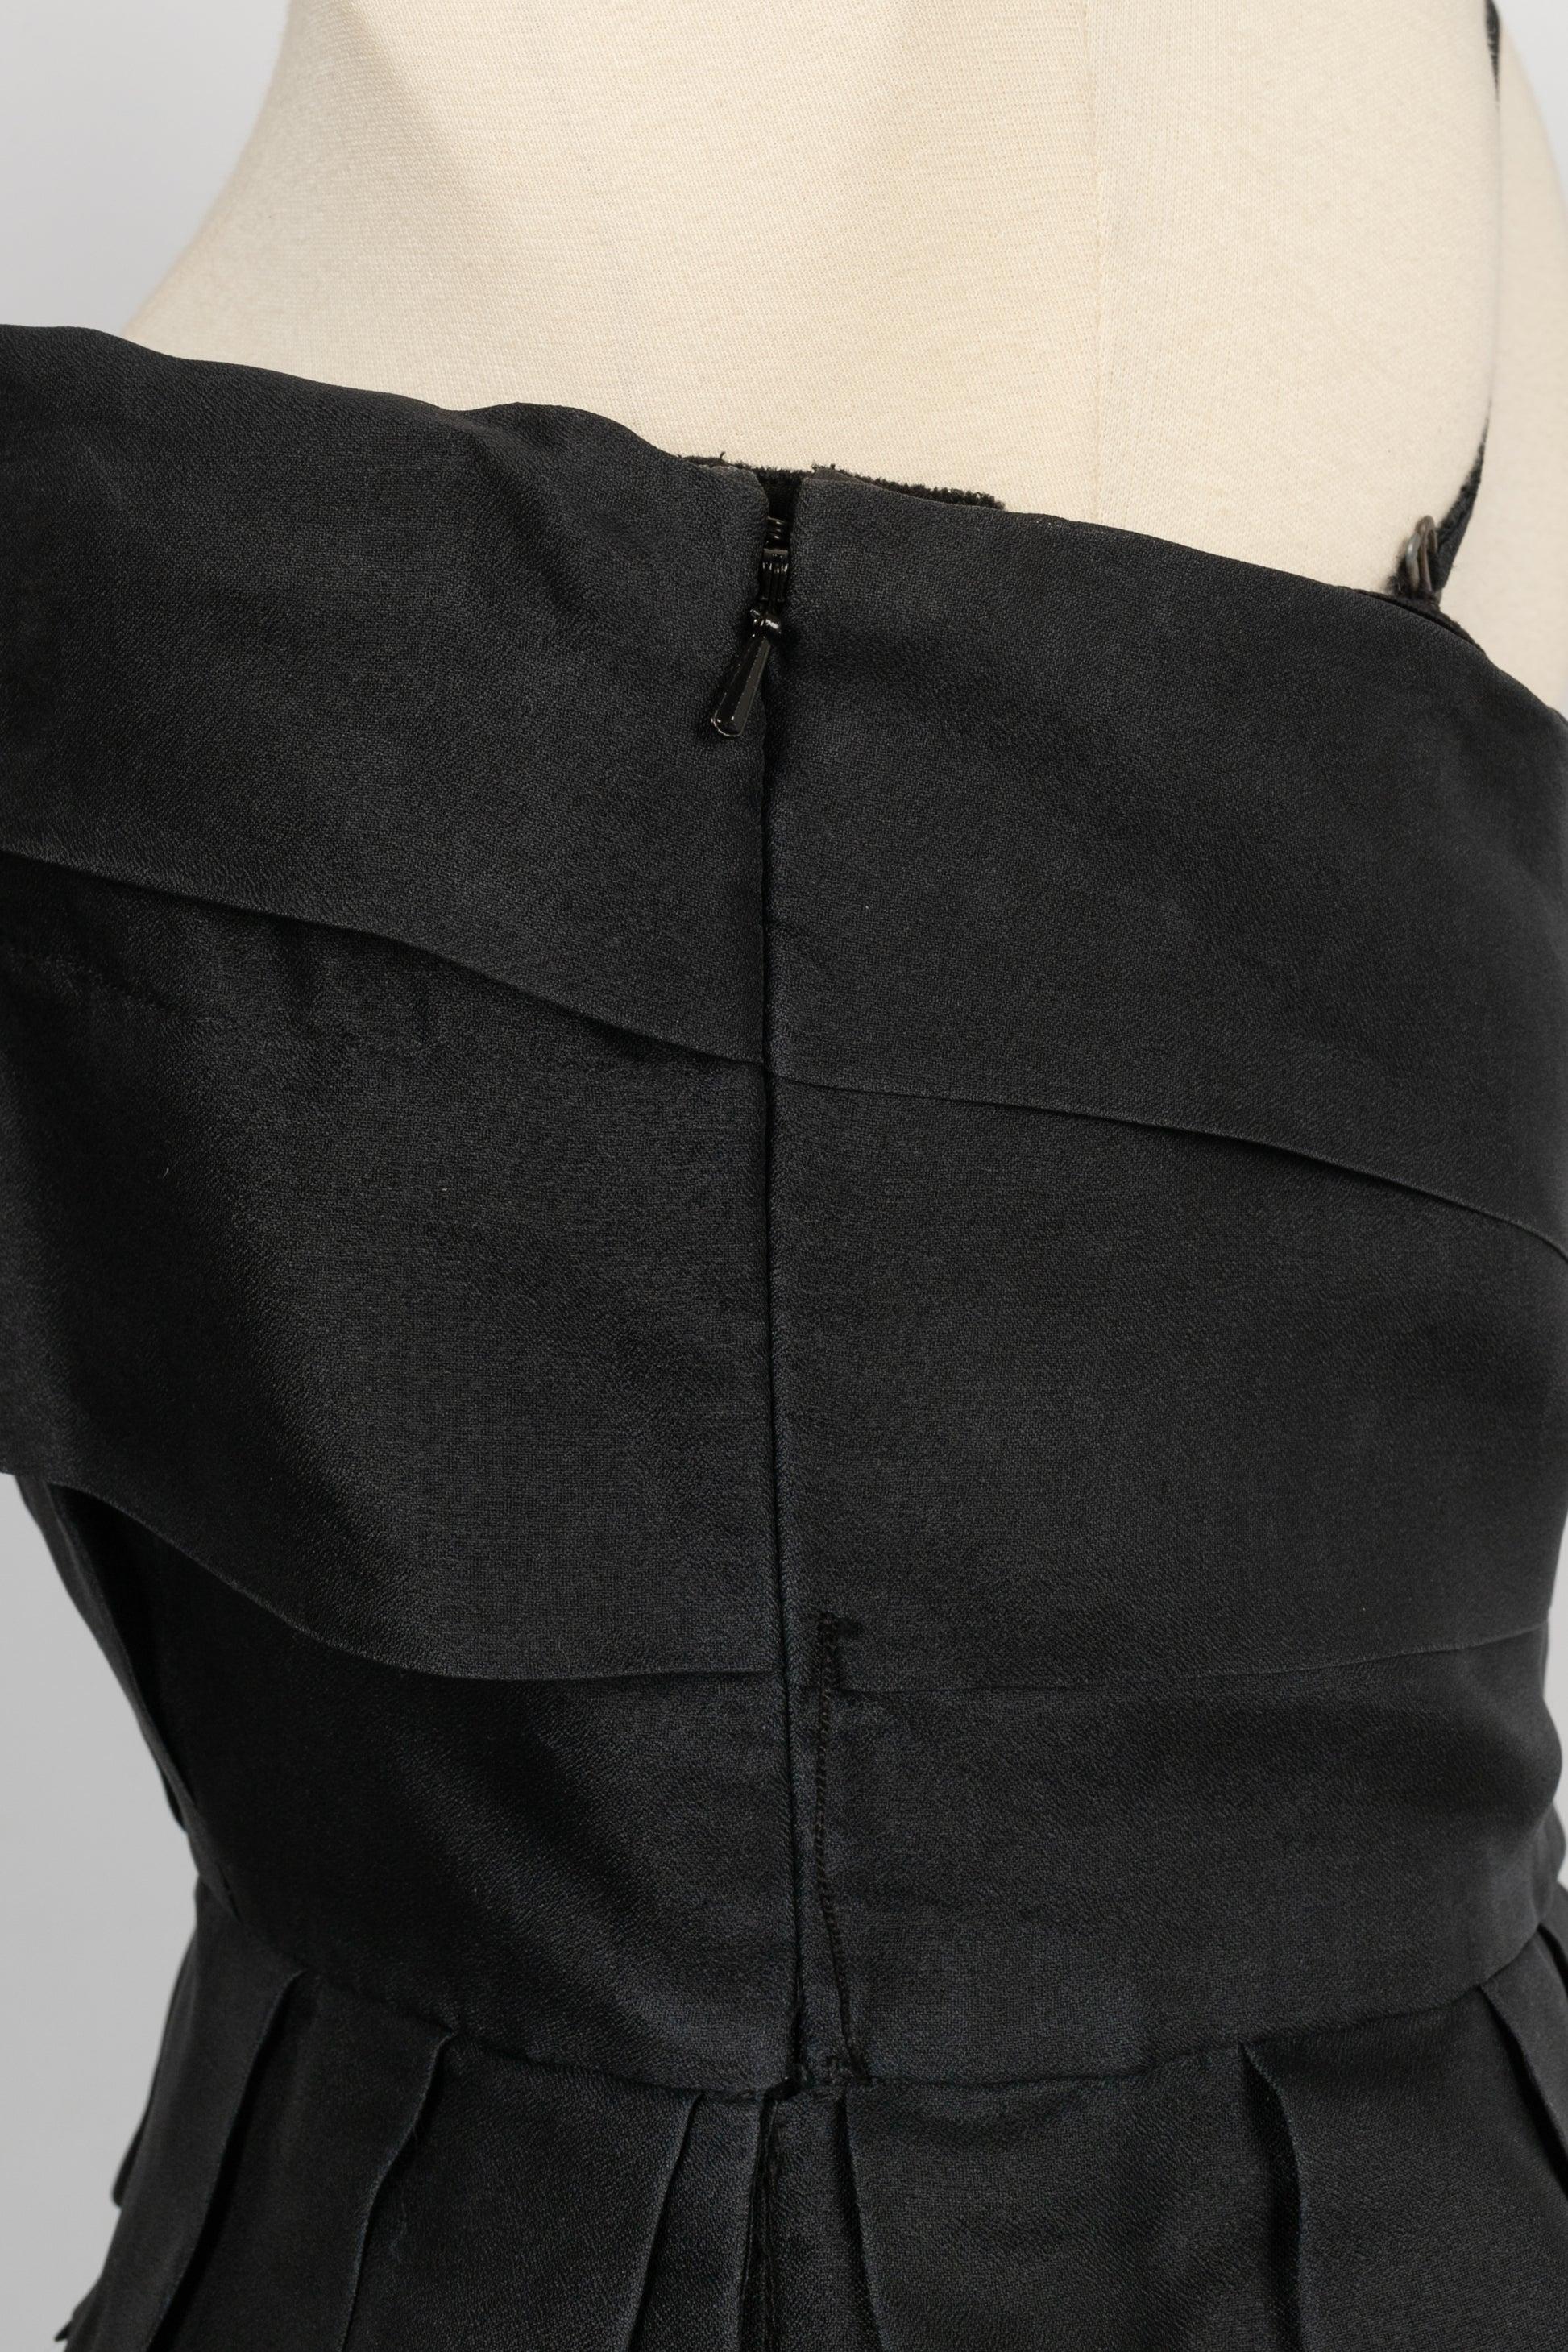 Christian Dior Black Silk Flounced Bustier Dress 42FR, 2009 3